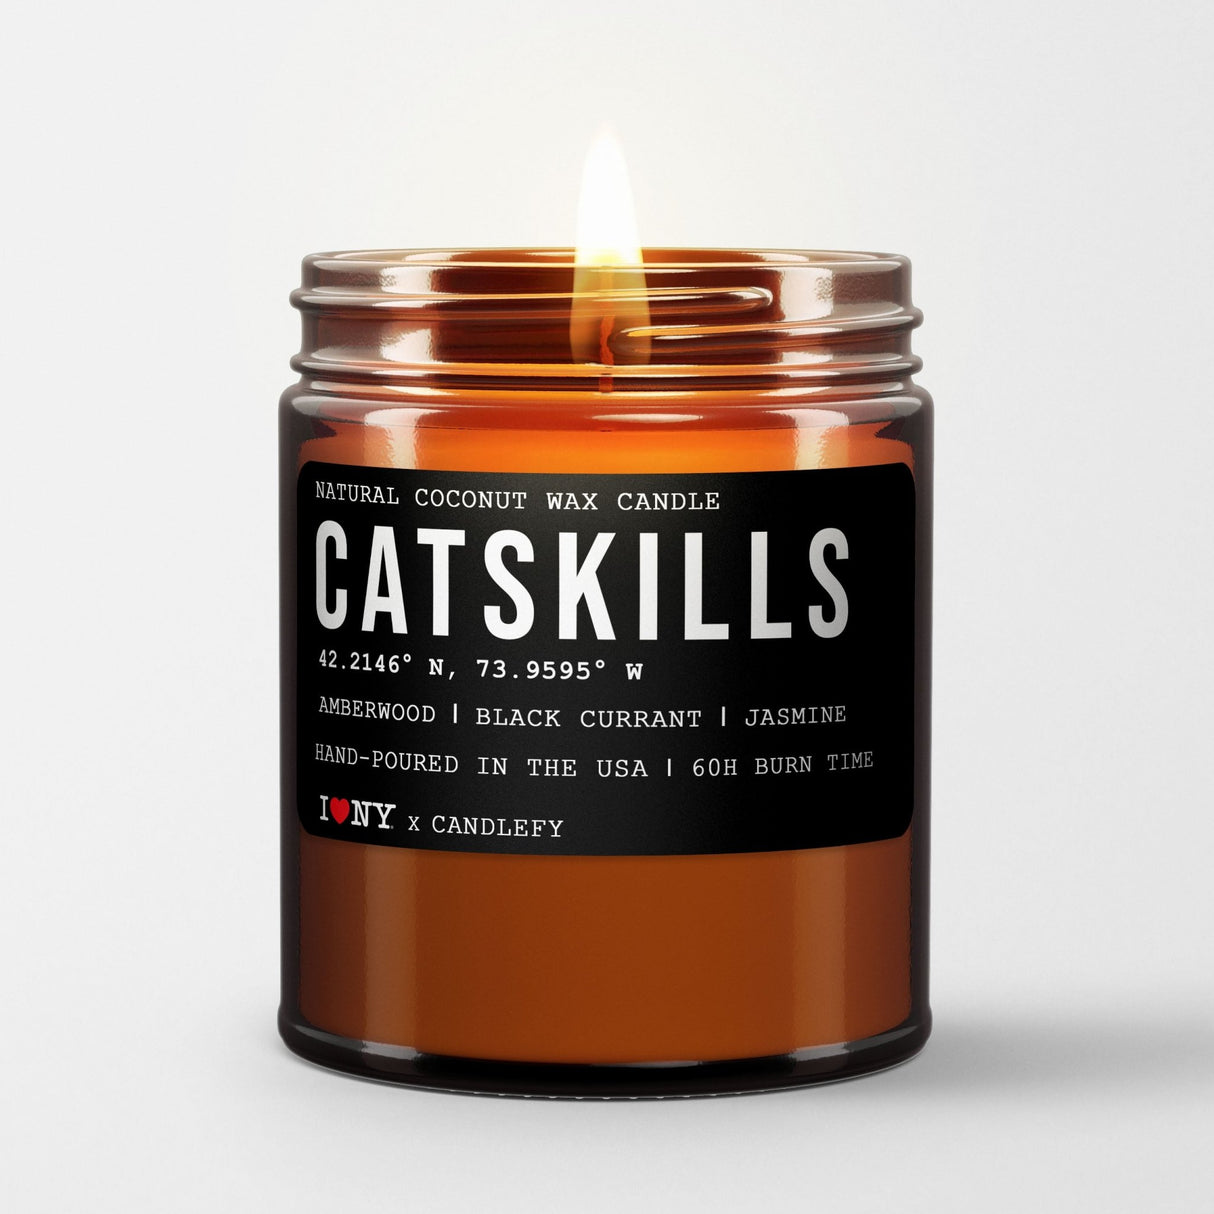 Catskills: New York Scented Candle (Amberwood, Black Currant, Jasmine) - Candlefy